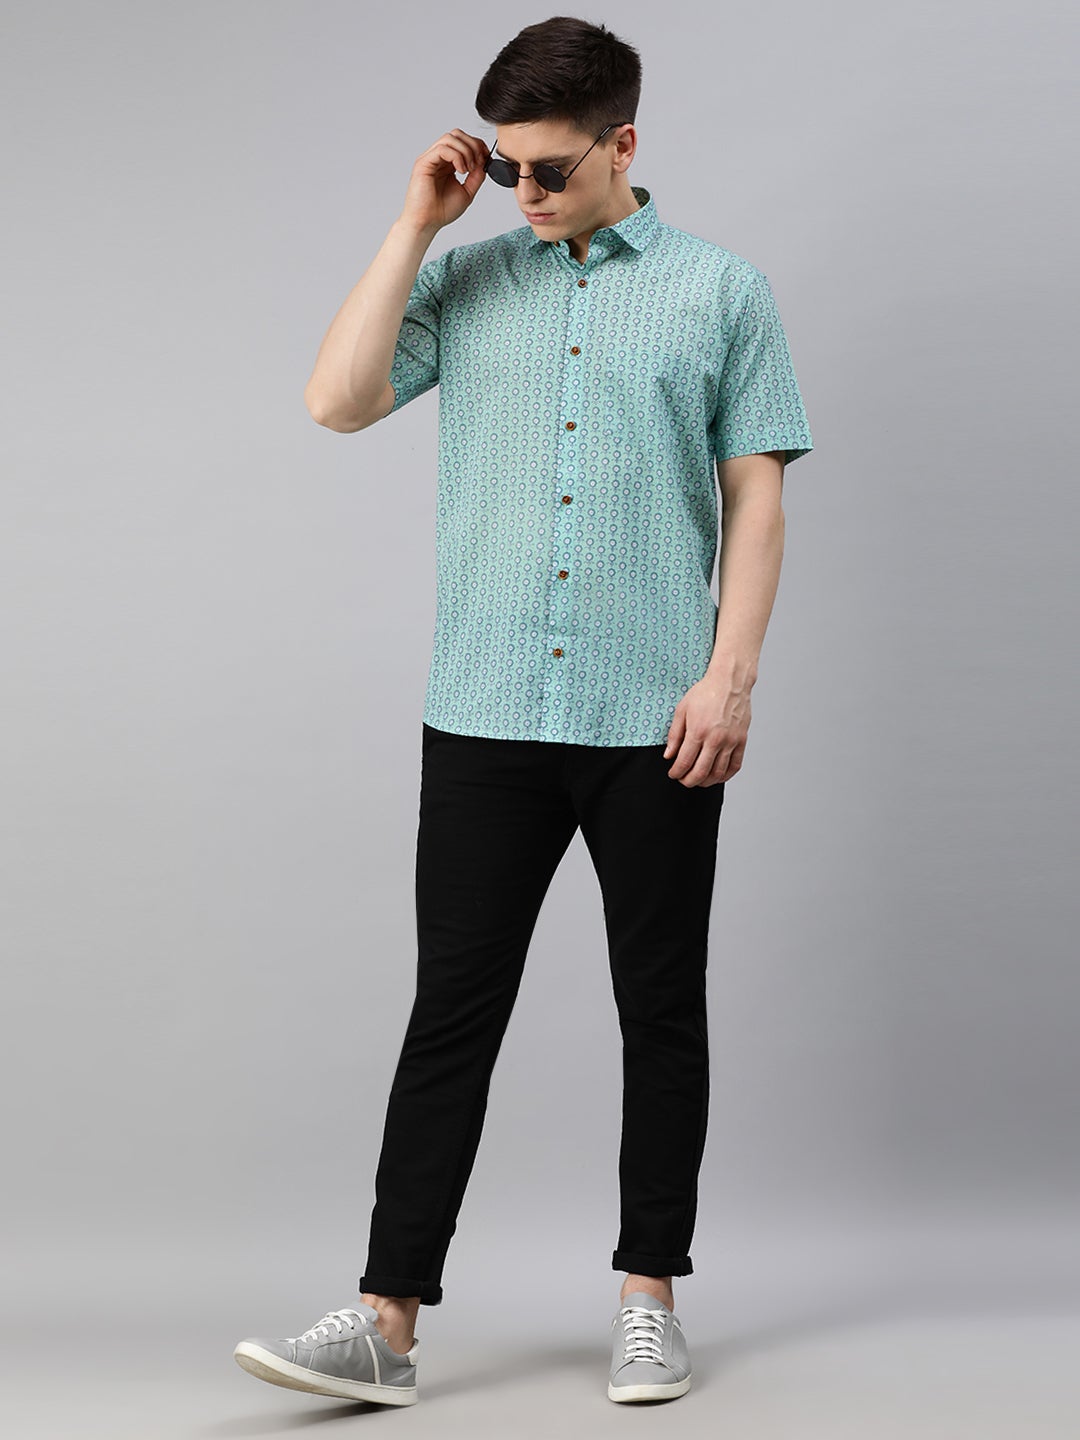 Sea Green Cotton Short Sleeves Shirts For Men-MMH029 - NOZ2TOZ